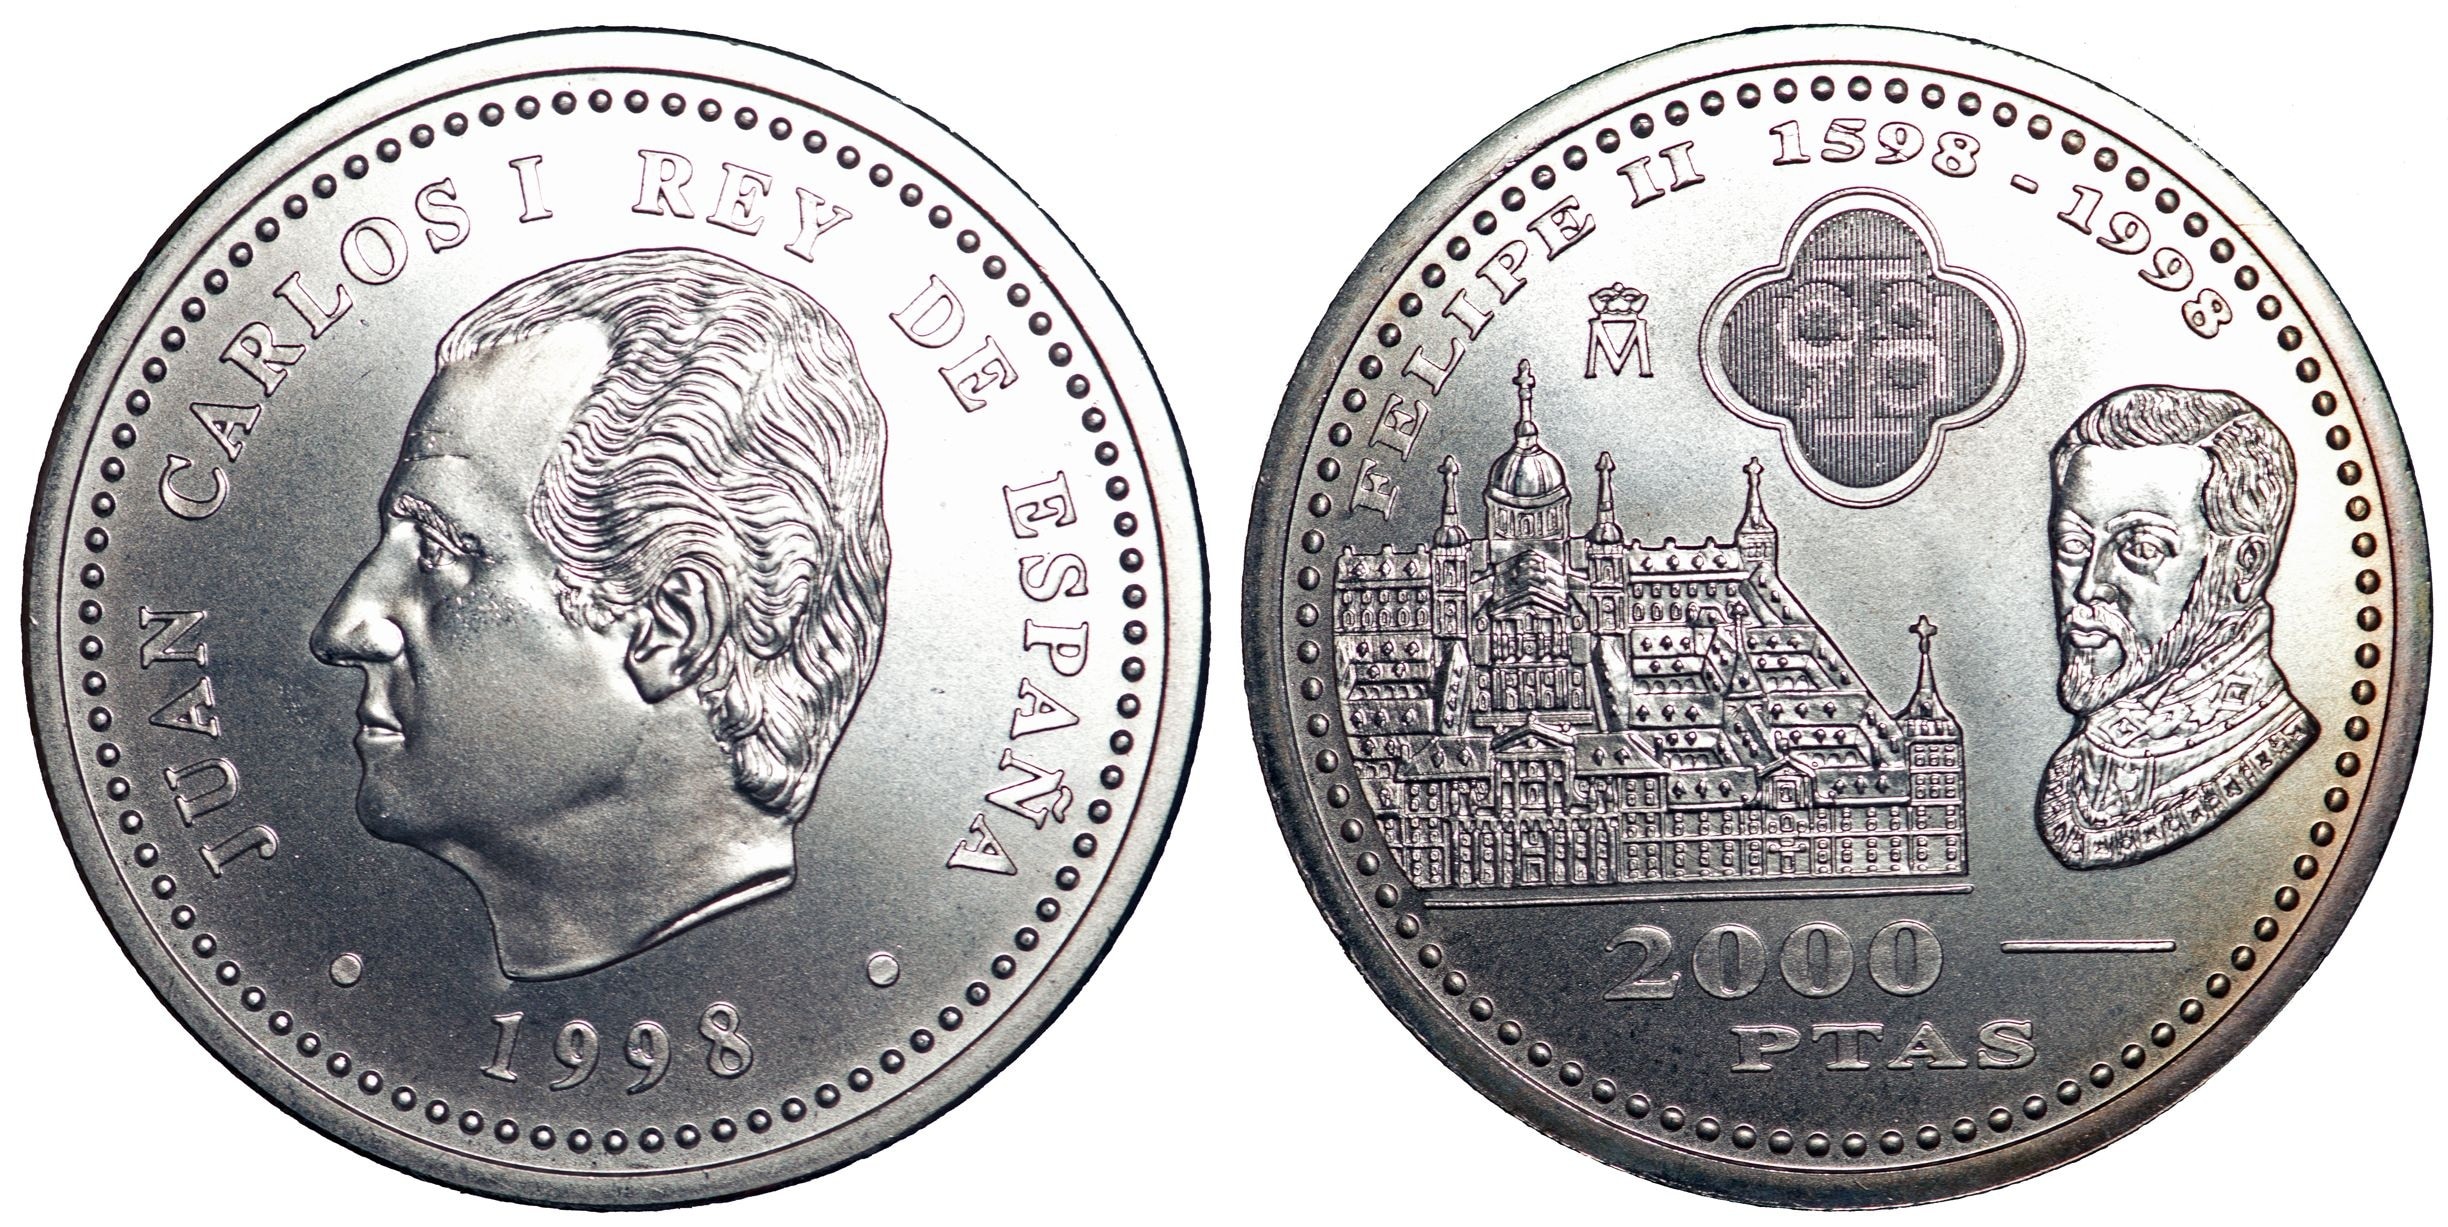 silver Jose Carlos Rey DE espana coin